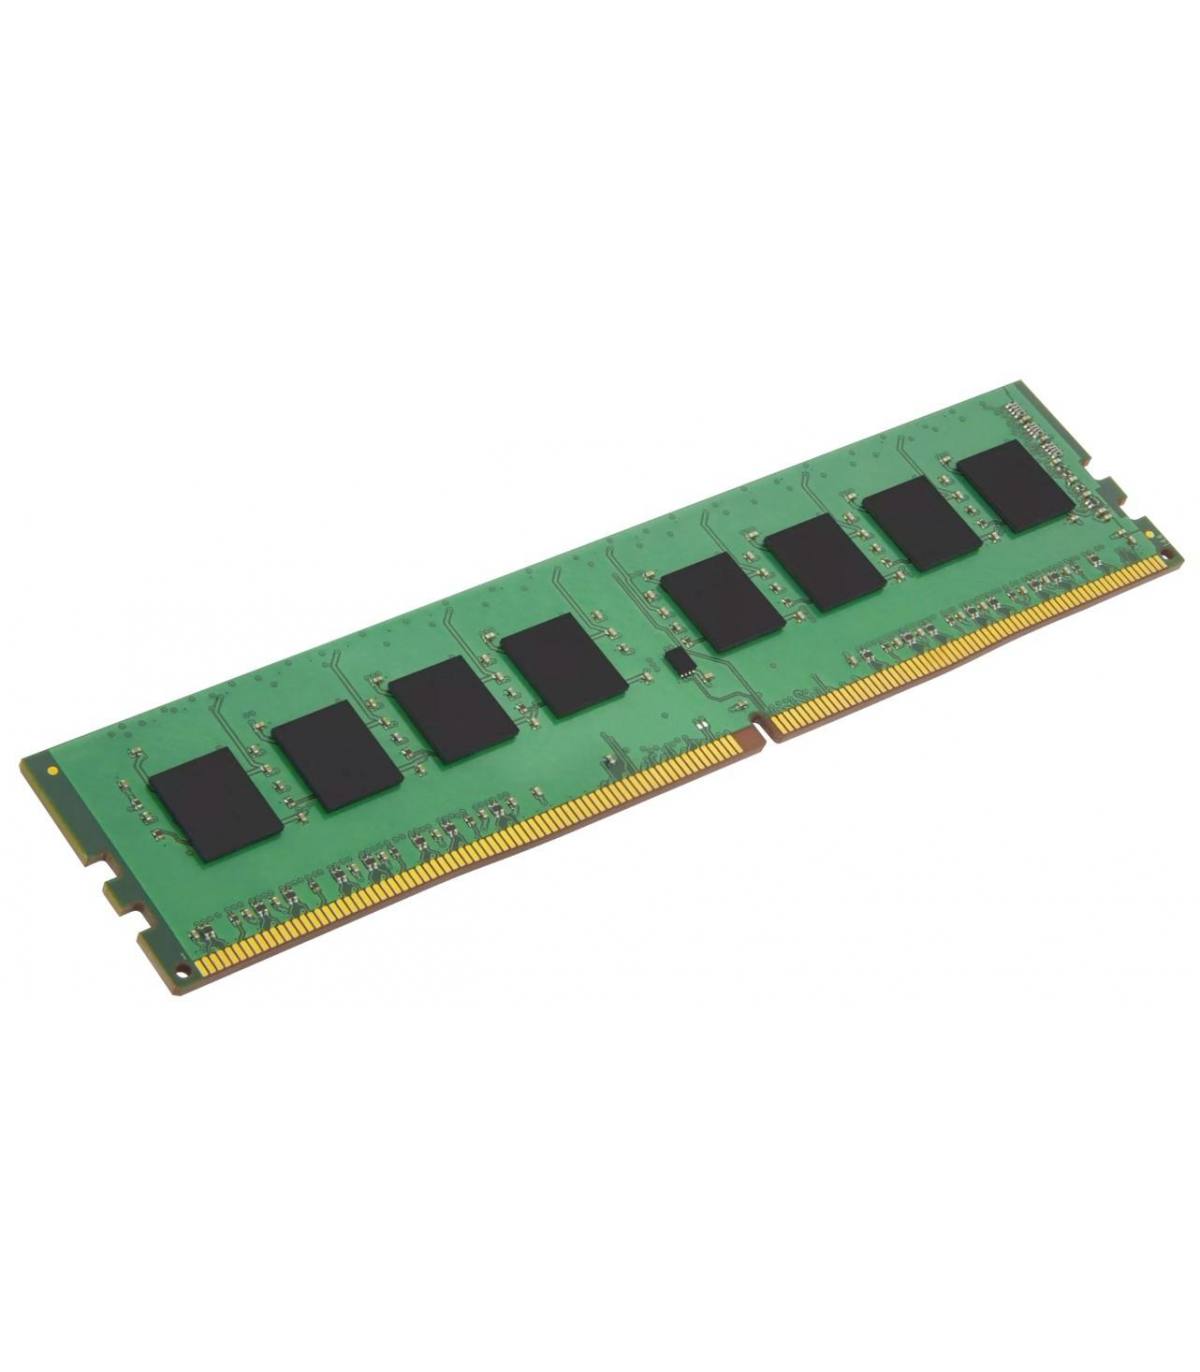 RAM SAMSUNG 1GB 2Rx8 PC2 4200F KR M395T2953CZD-CD5 0704